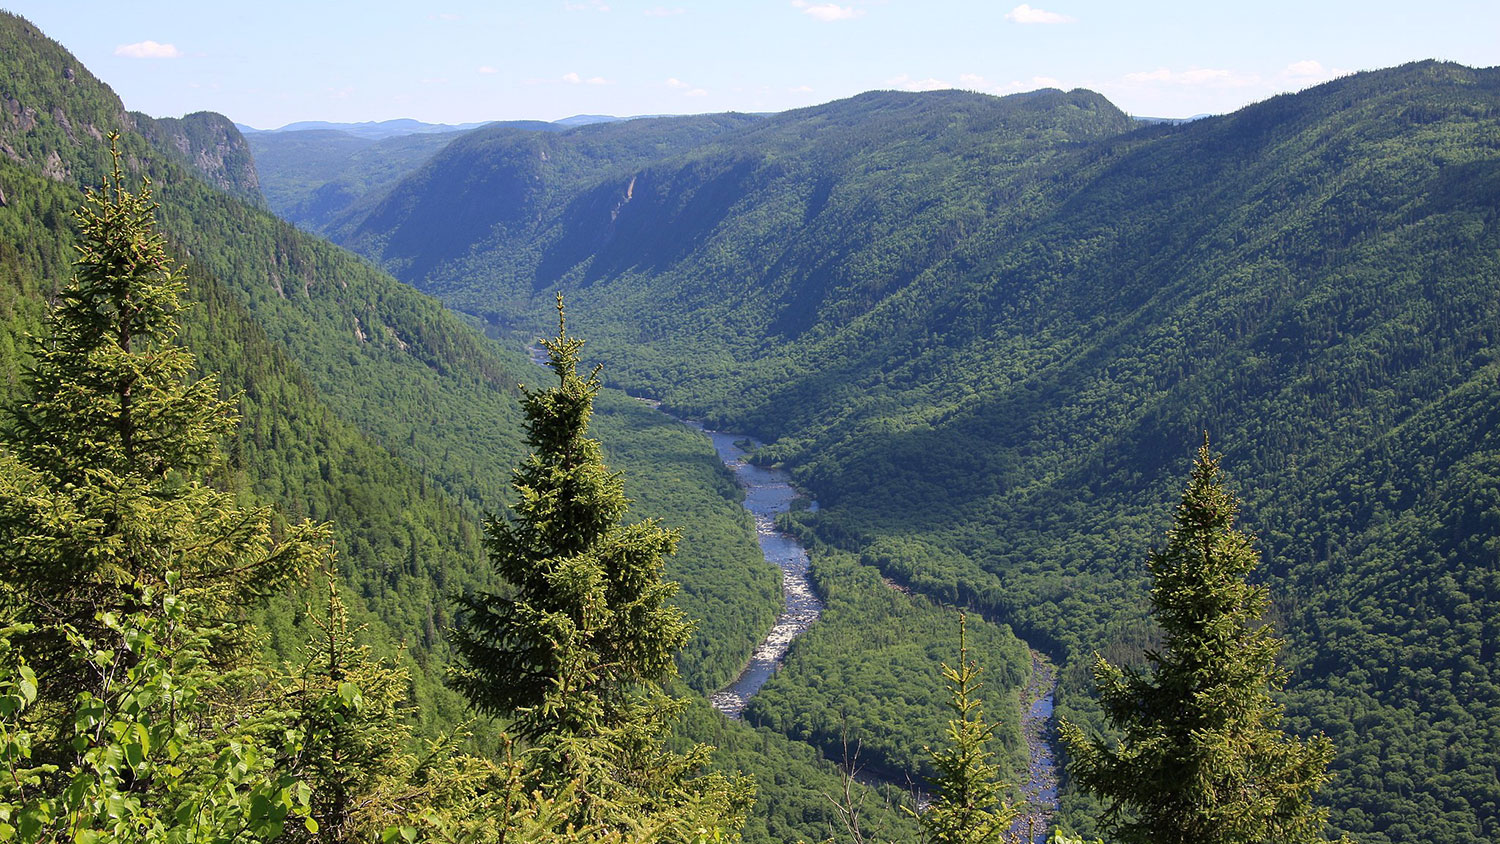 Jacques-Castier河在加拿大魁北克魁北克的雅克 - 卡地亚国家公园的森林山脉之间跑。